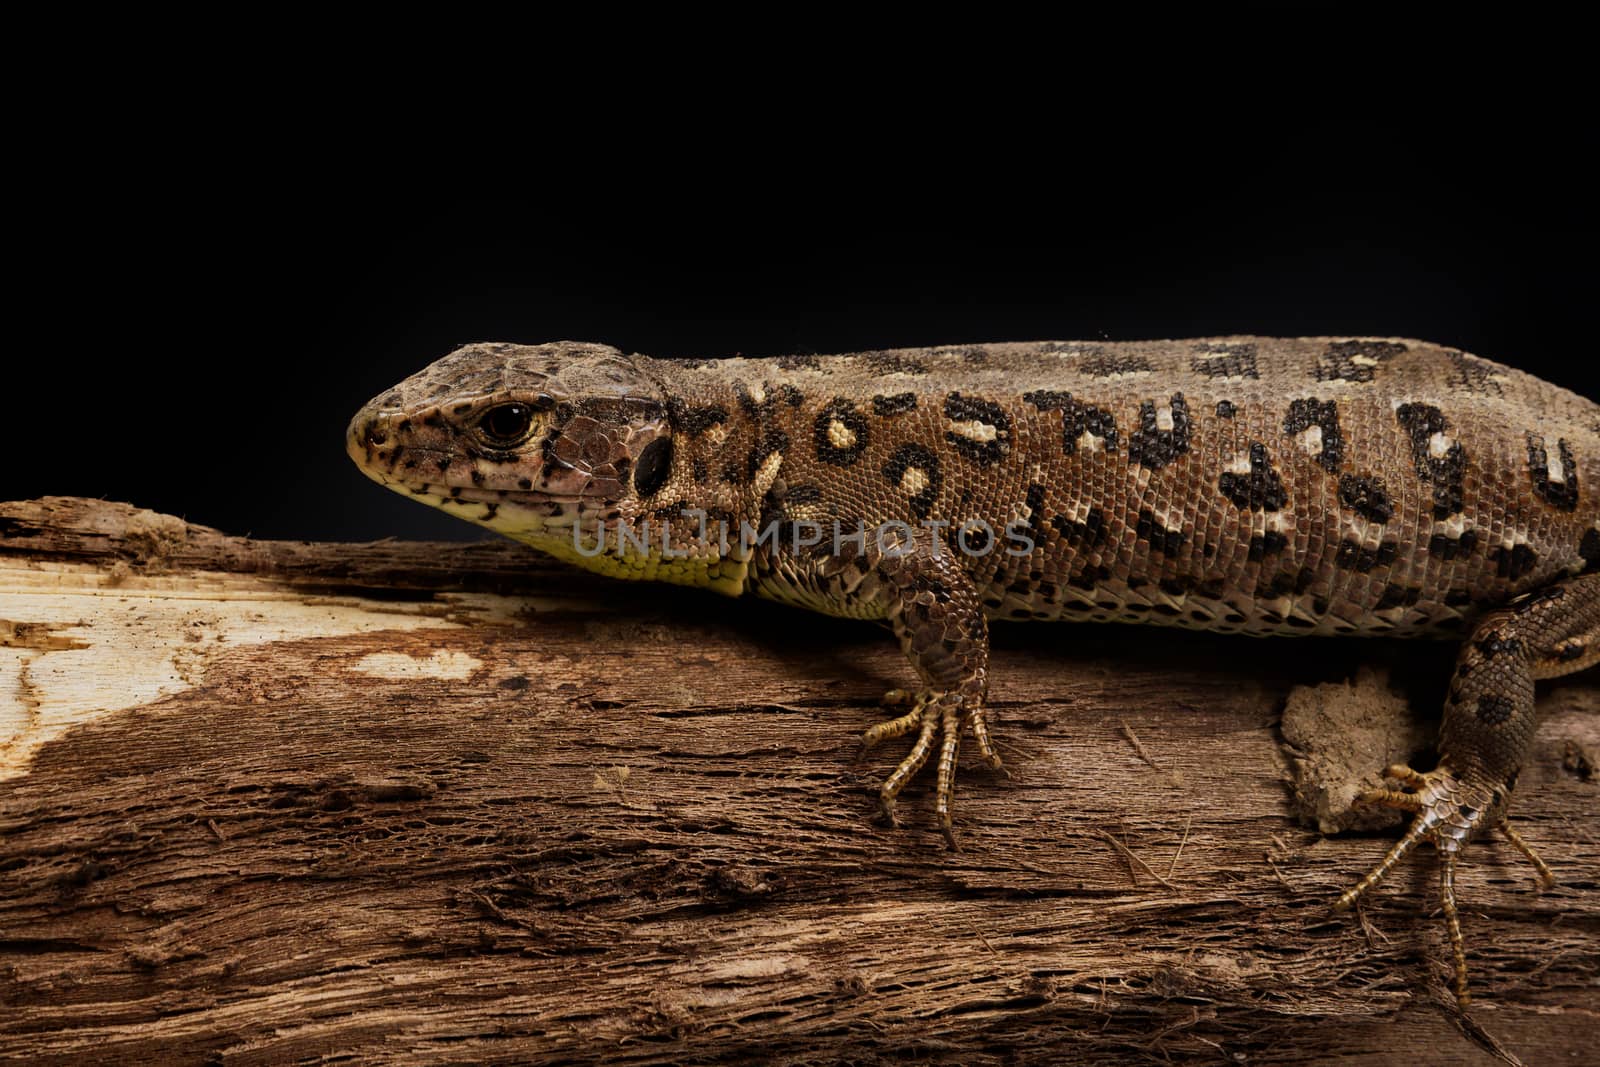 Sand lizard (Lacerta agilis) on a wood by neryx